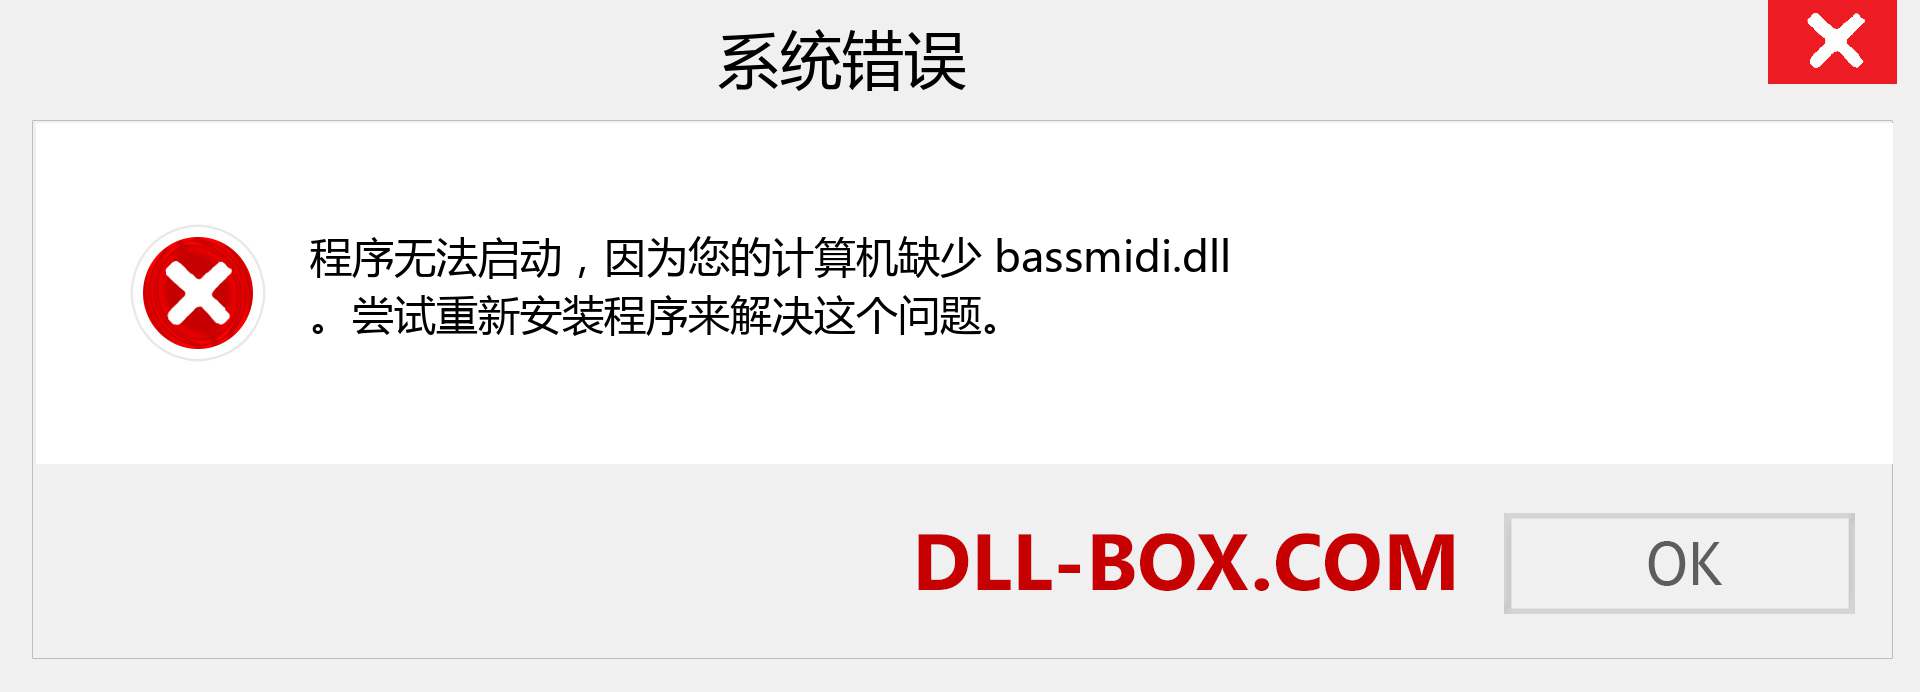 bassmidi.dll 文件丢失？。 适用于 Windows 7、8、10 的下载 - 修复 Windows、照片、图像上的 bassmidi dll 丢失错误